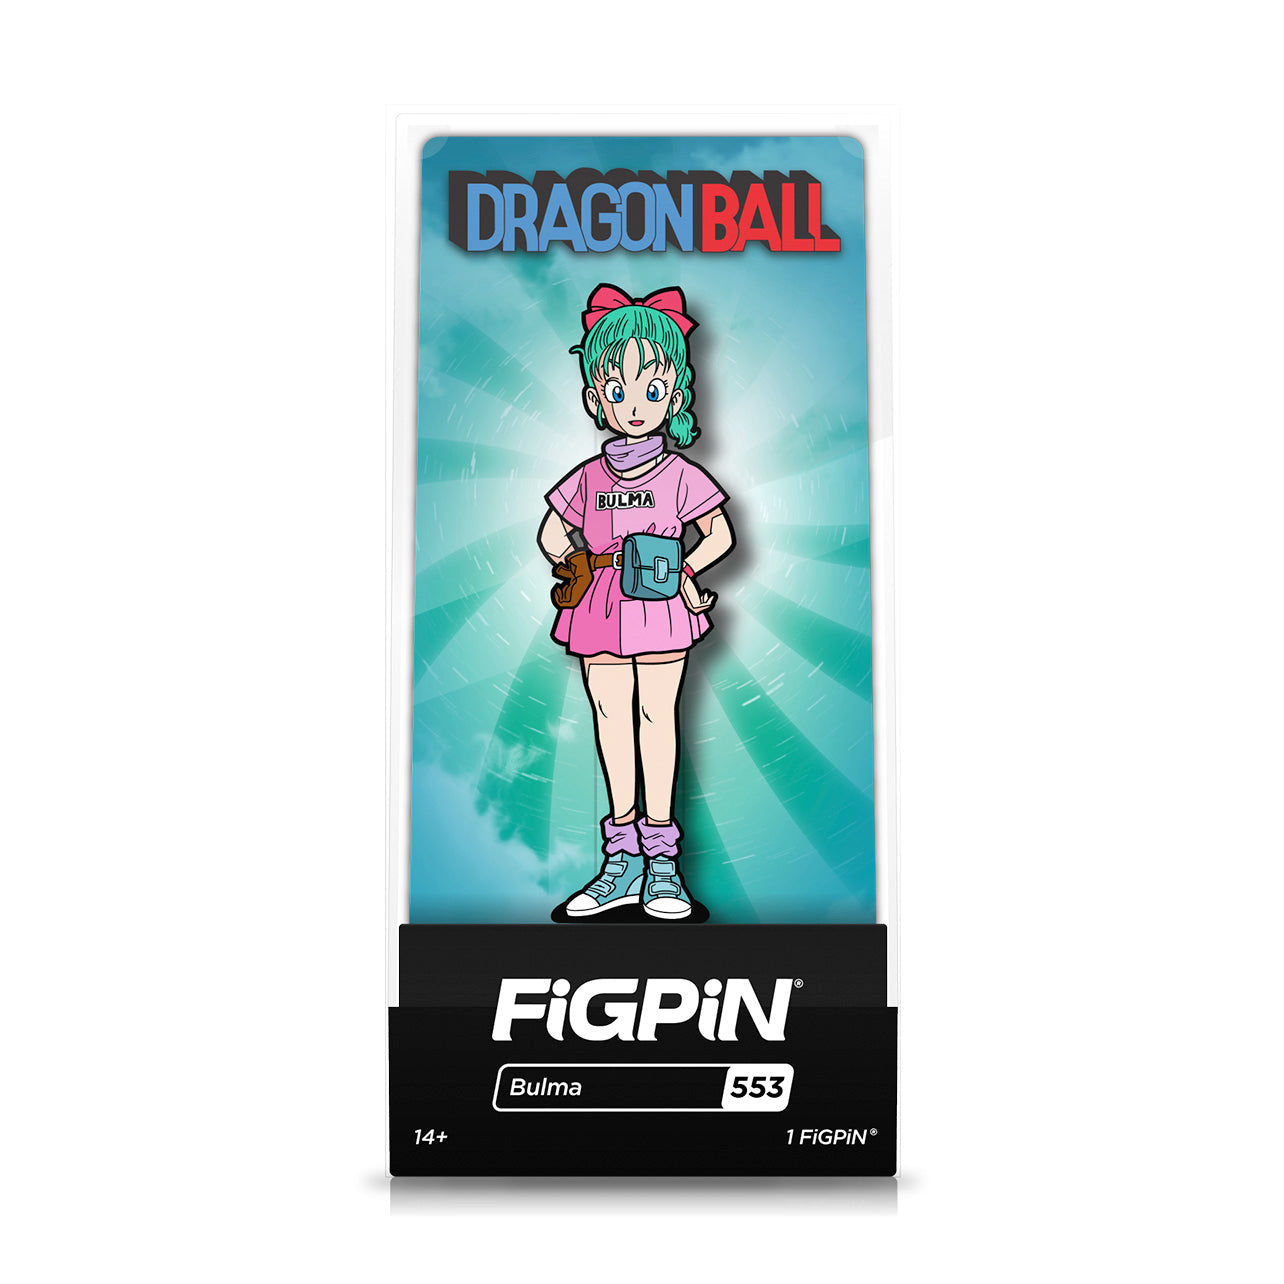 Dragon Ball - Bulma (#553) FiGPiN image count 1